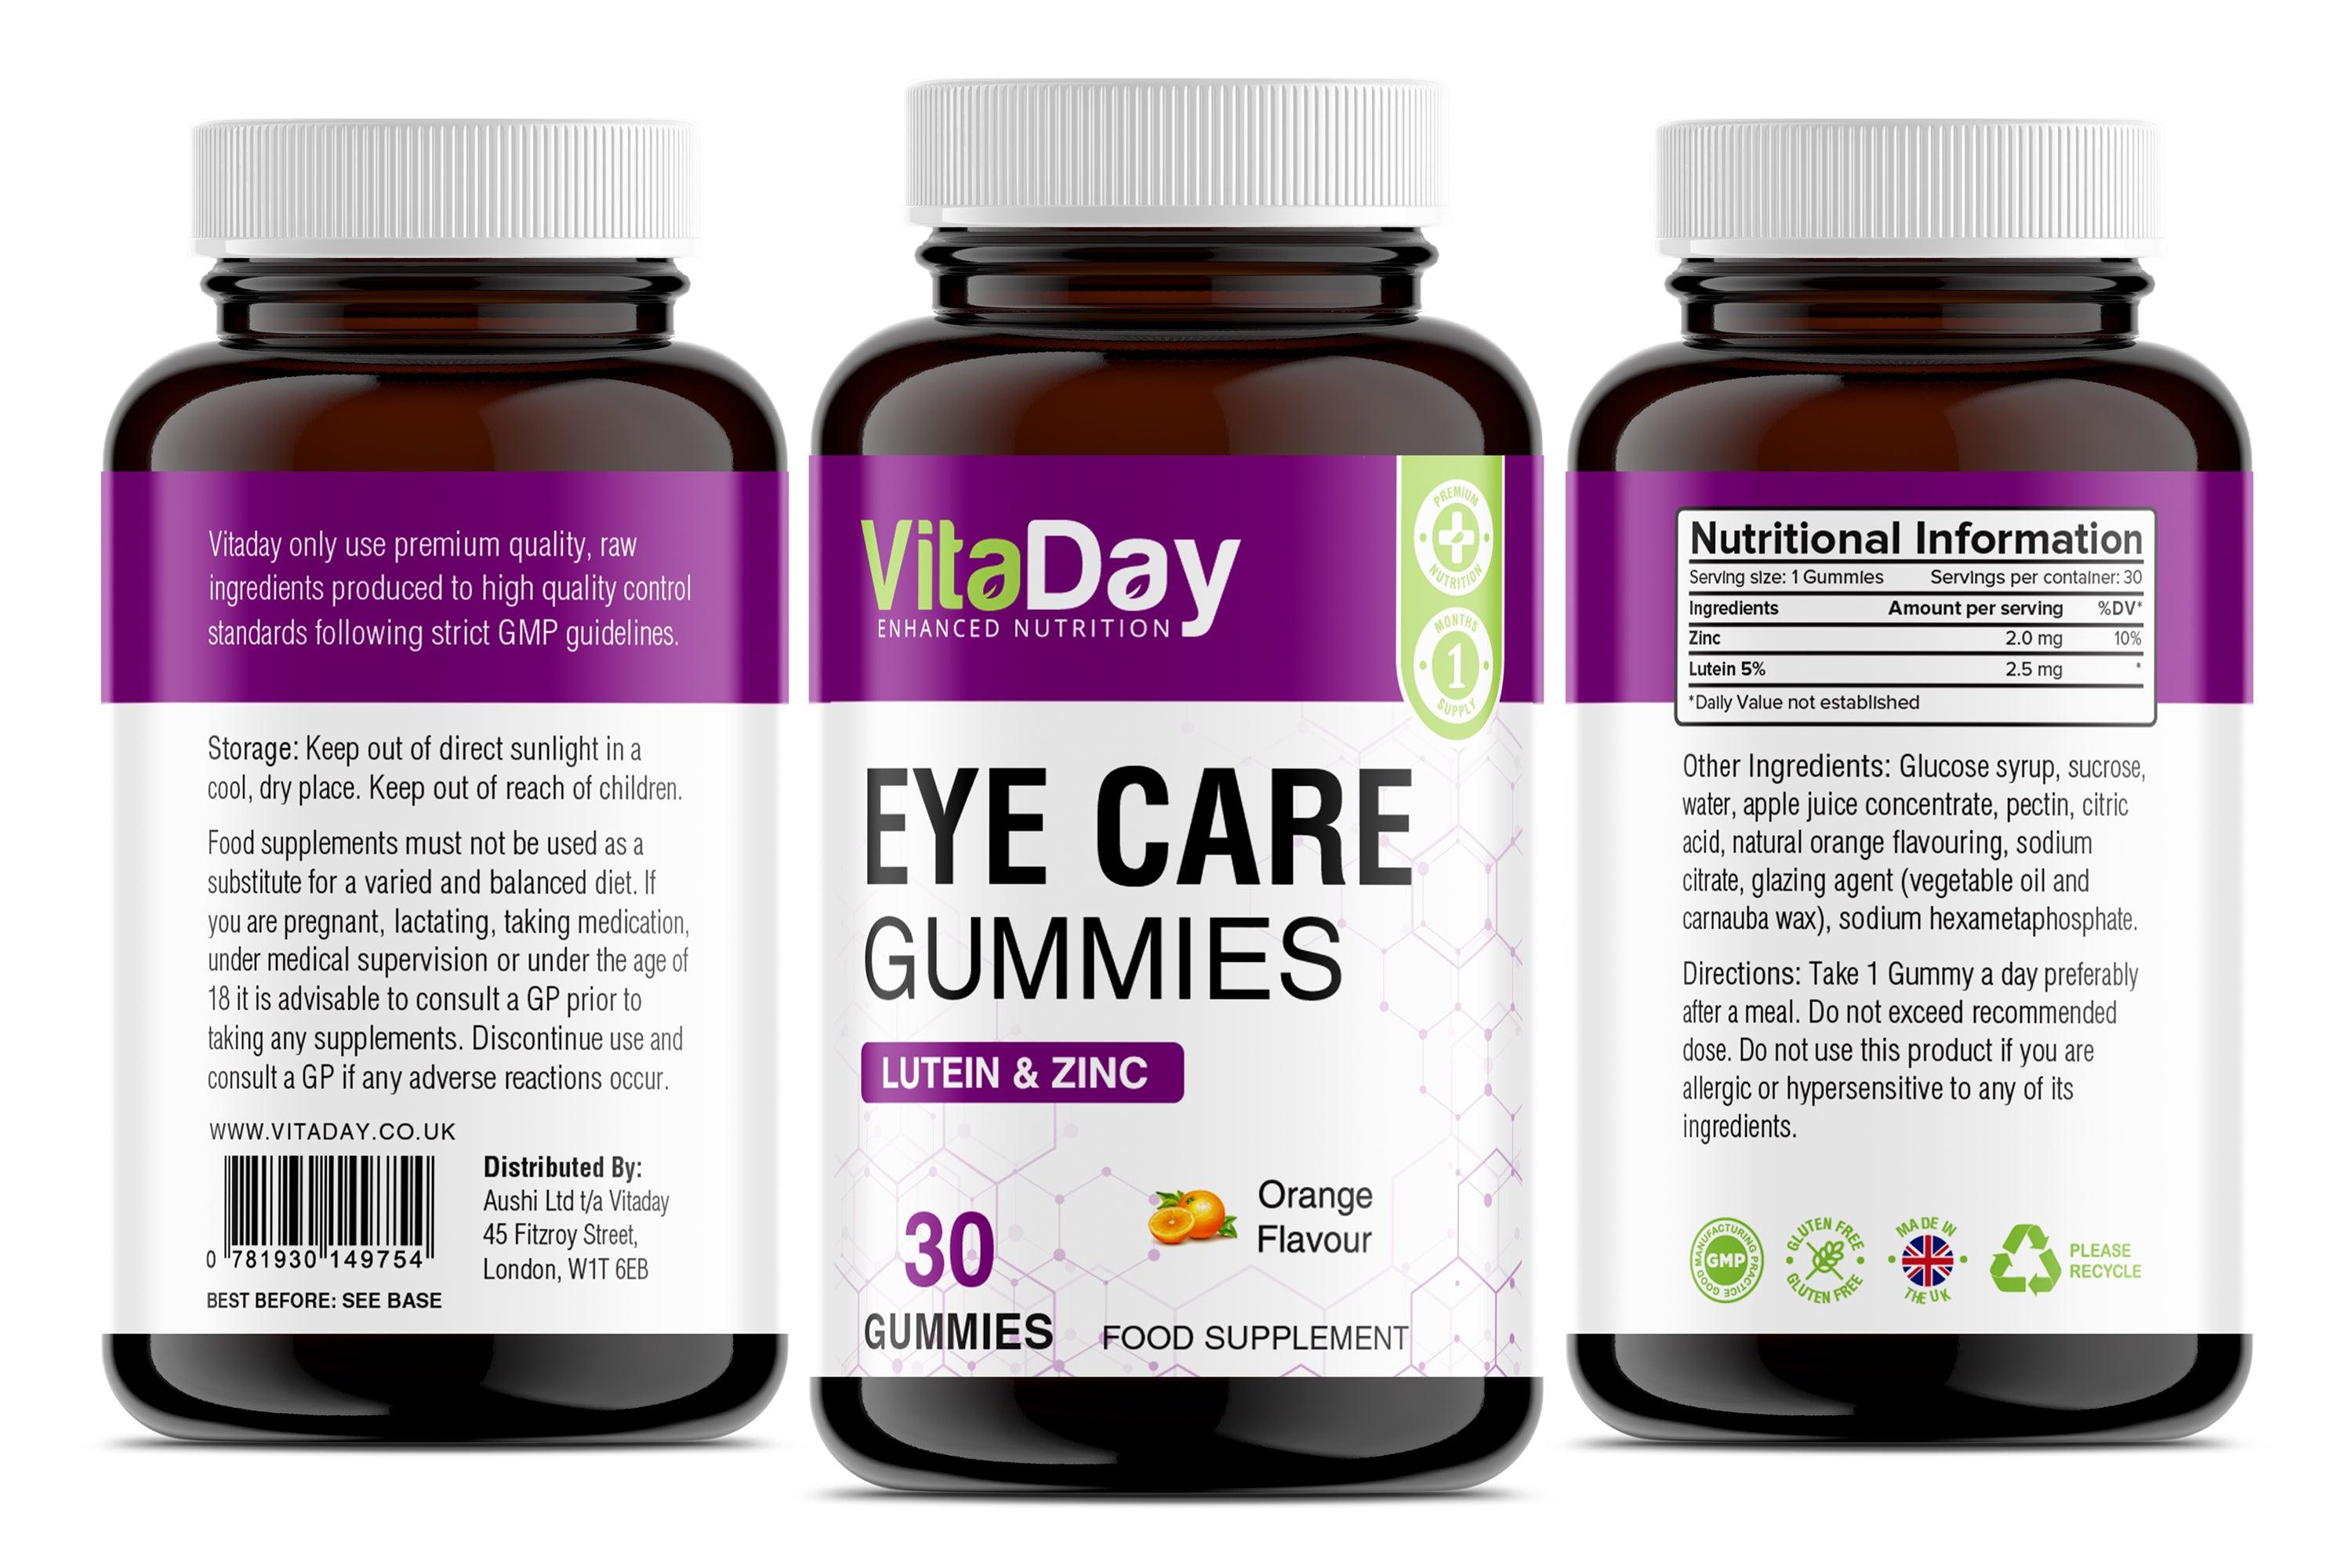 Eye Care Gummies with Lutein & Zinc - Vitaday